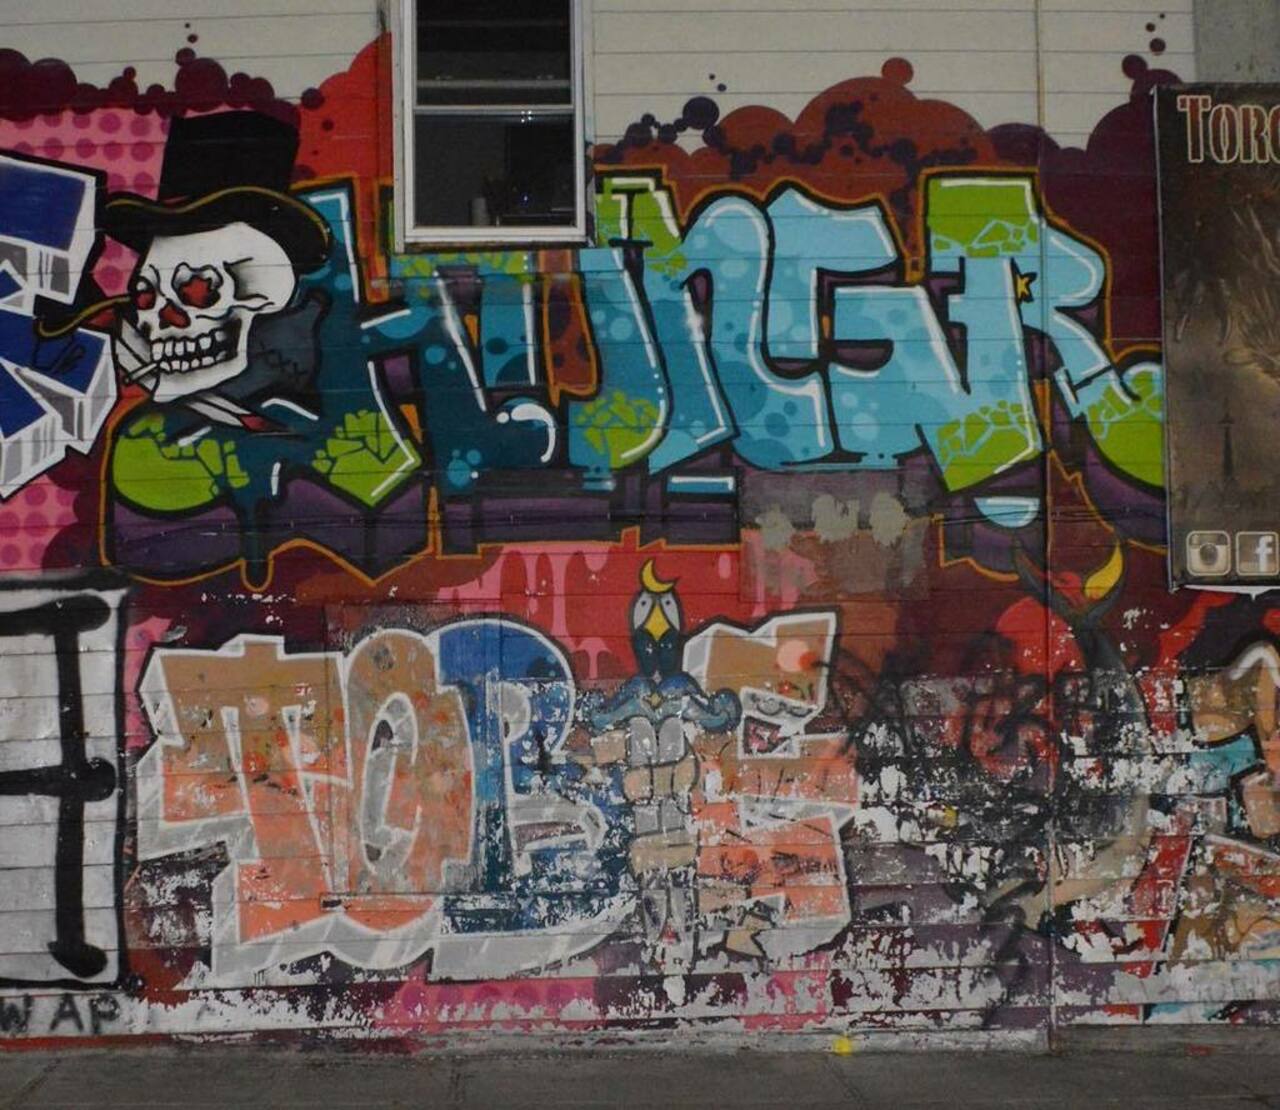 RT @artpushr: via #radstuffhunting "http://ift.tt/1LIUCdI" #graffiti #streetart http://t.co/77o5Agl4zN